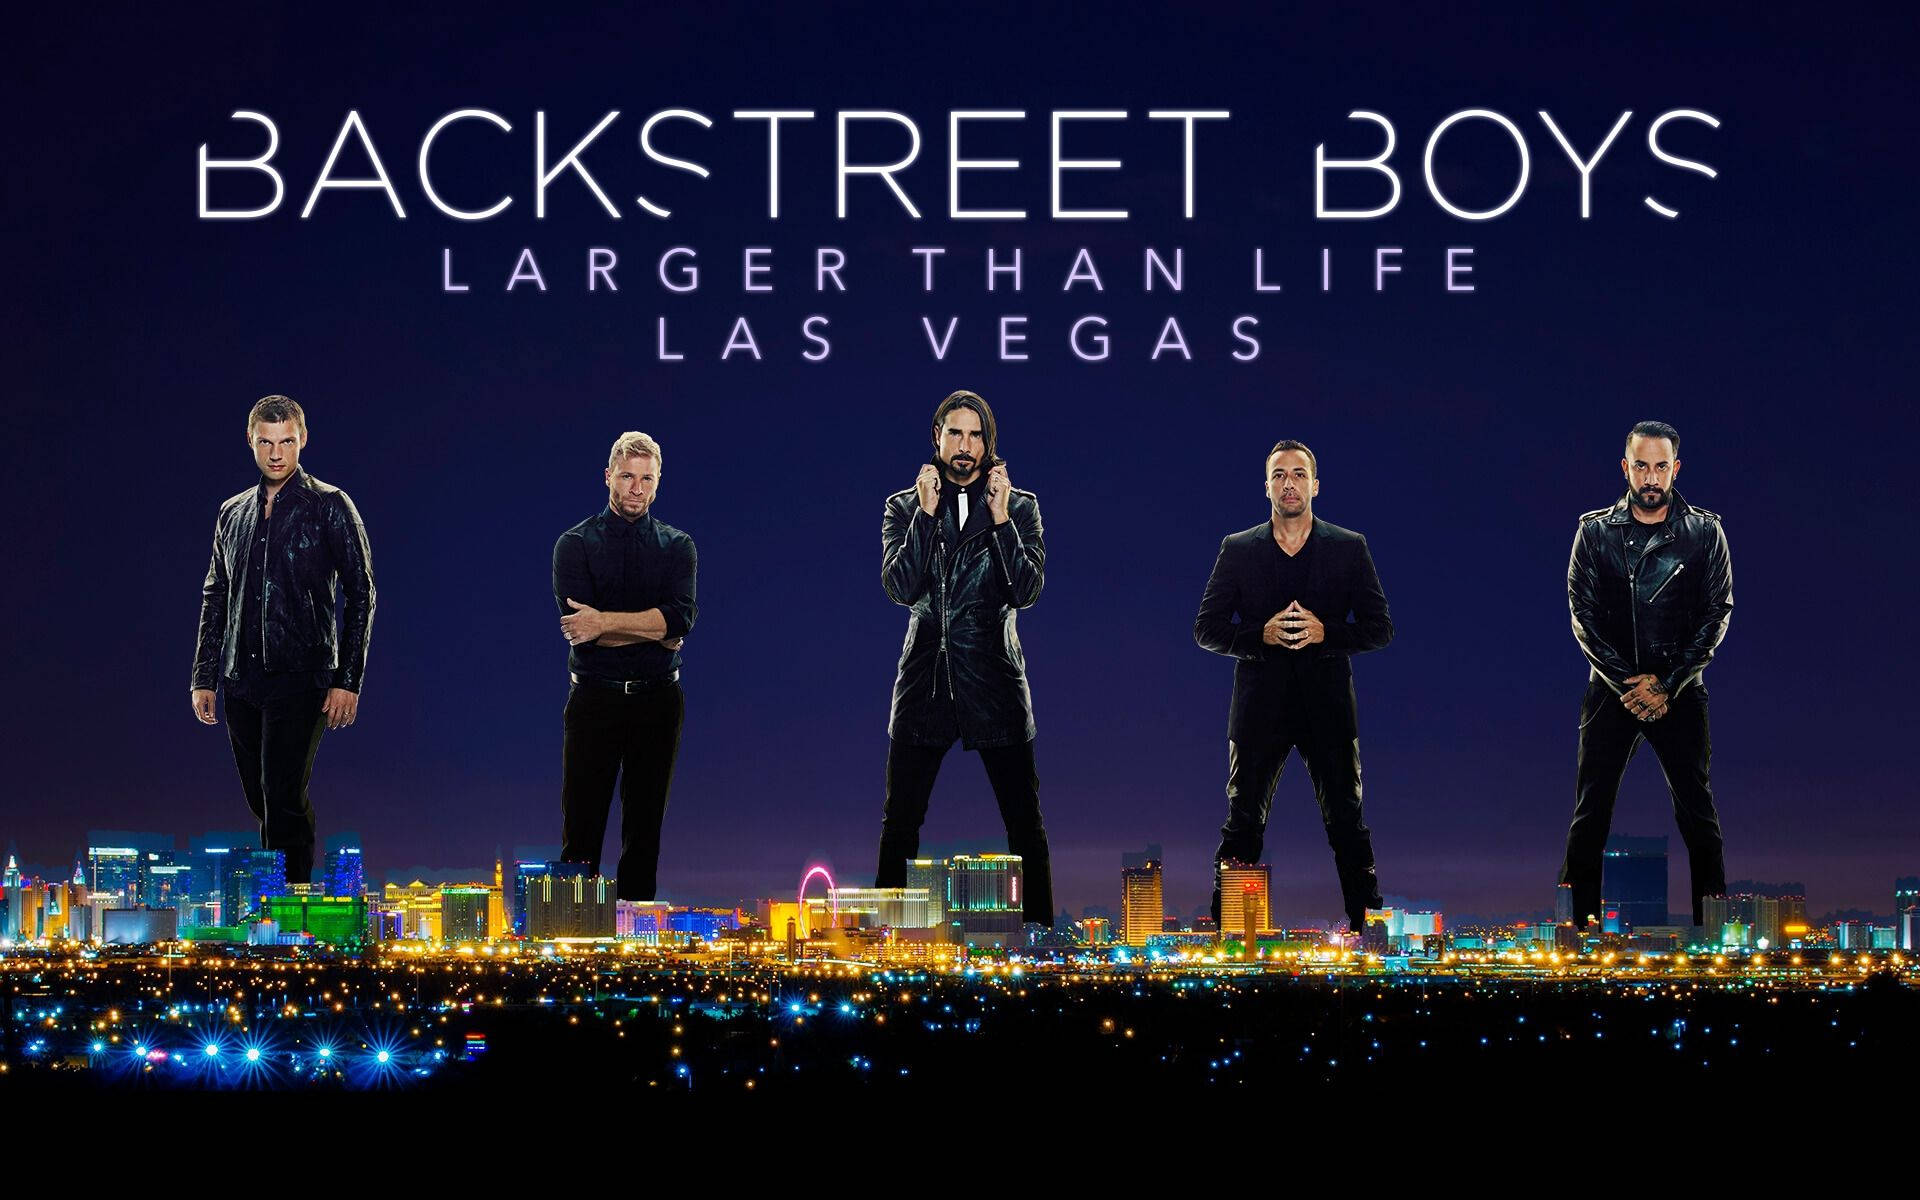 The Backstreet Boys taking the stage in Las Vegas. Wallpaper